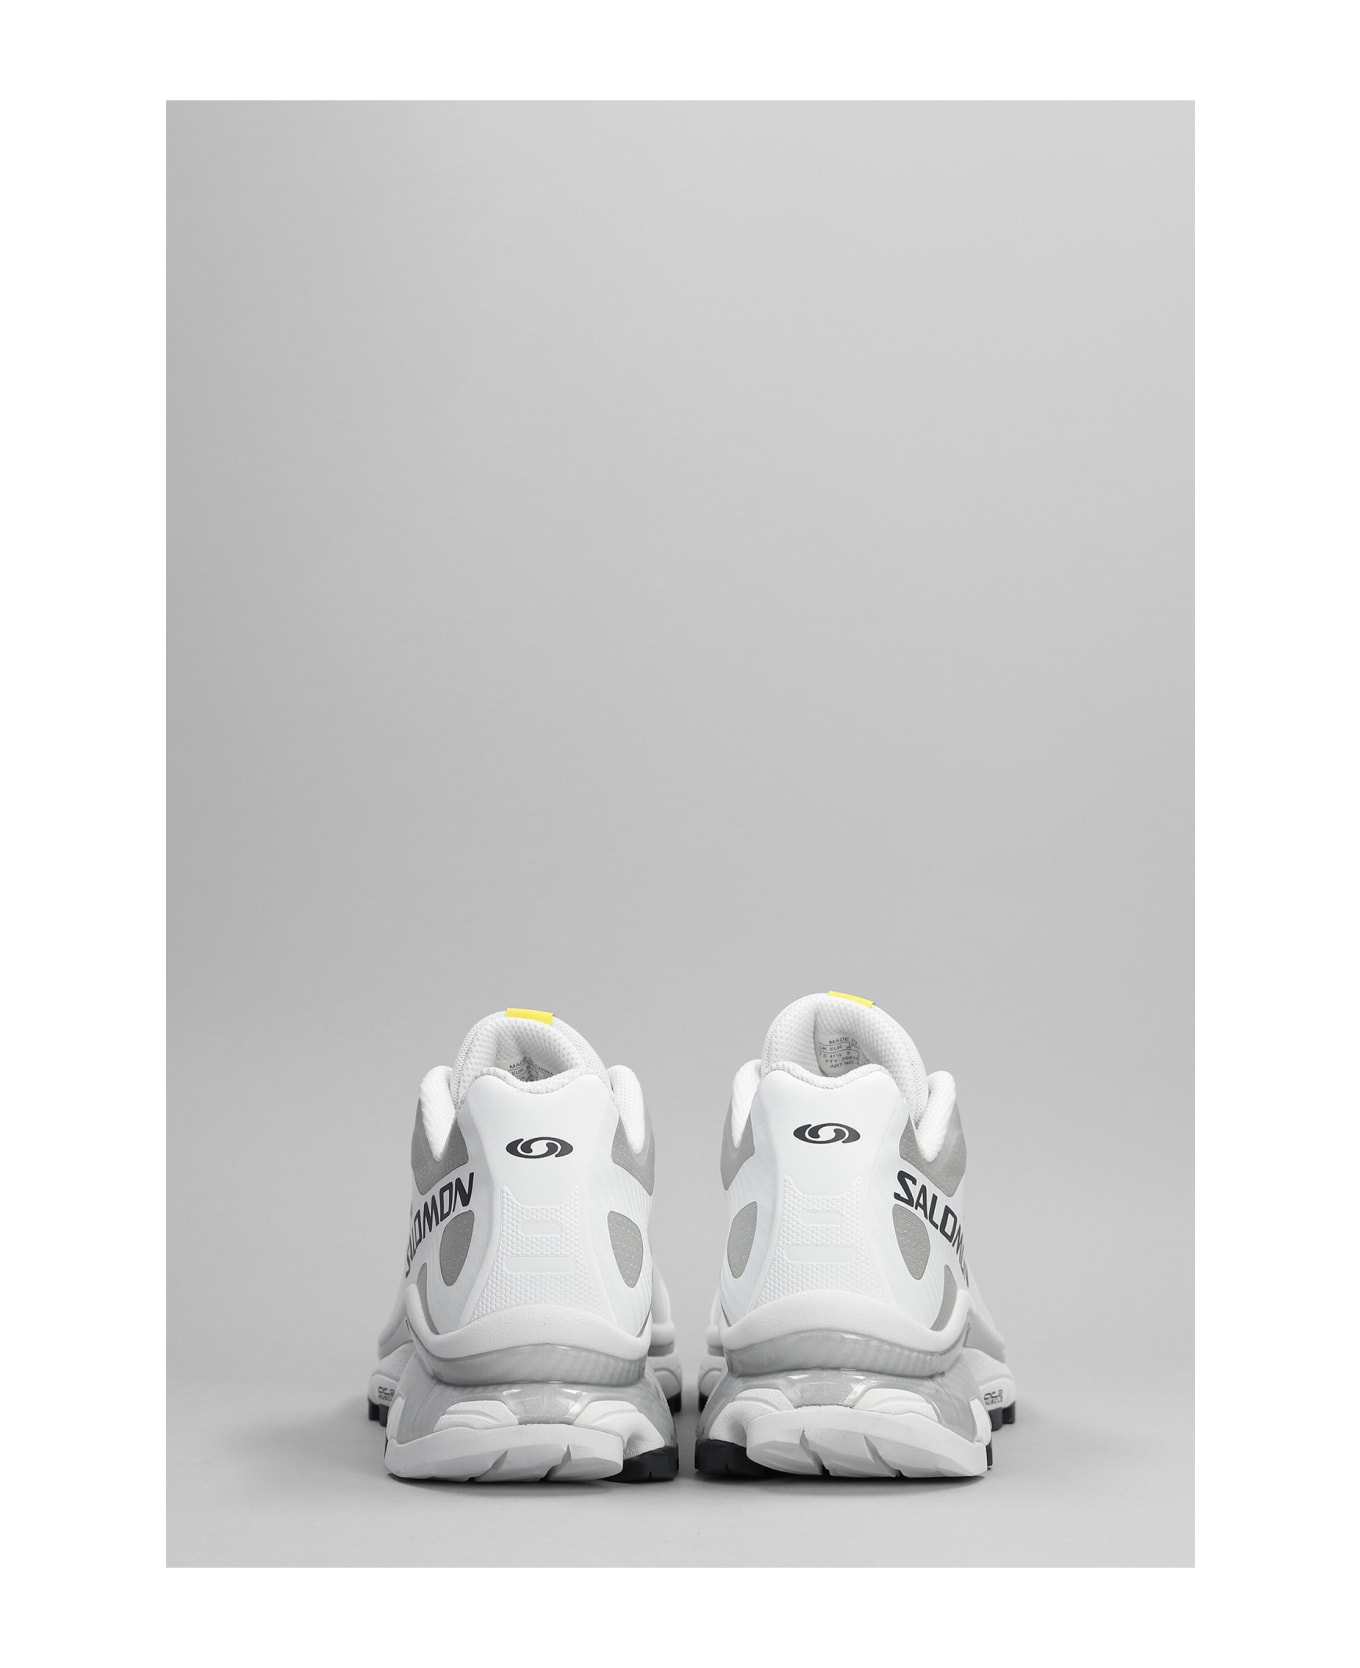 Salomon Xt-4 Og Sneakers In White Synthetic Fibers - White/ebony/lunar rock